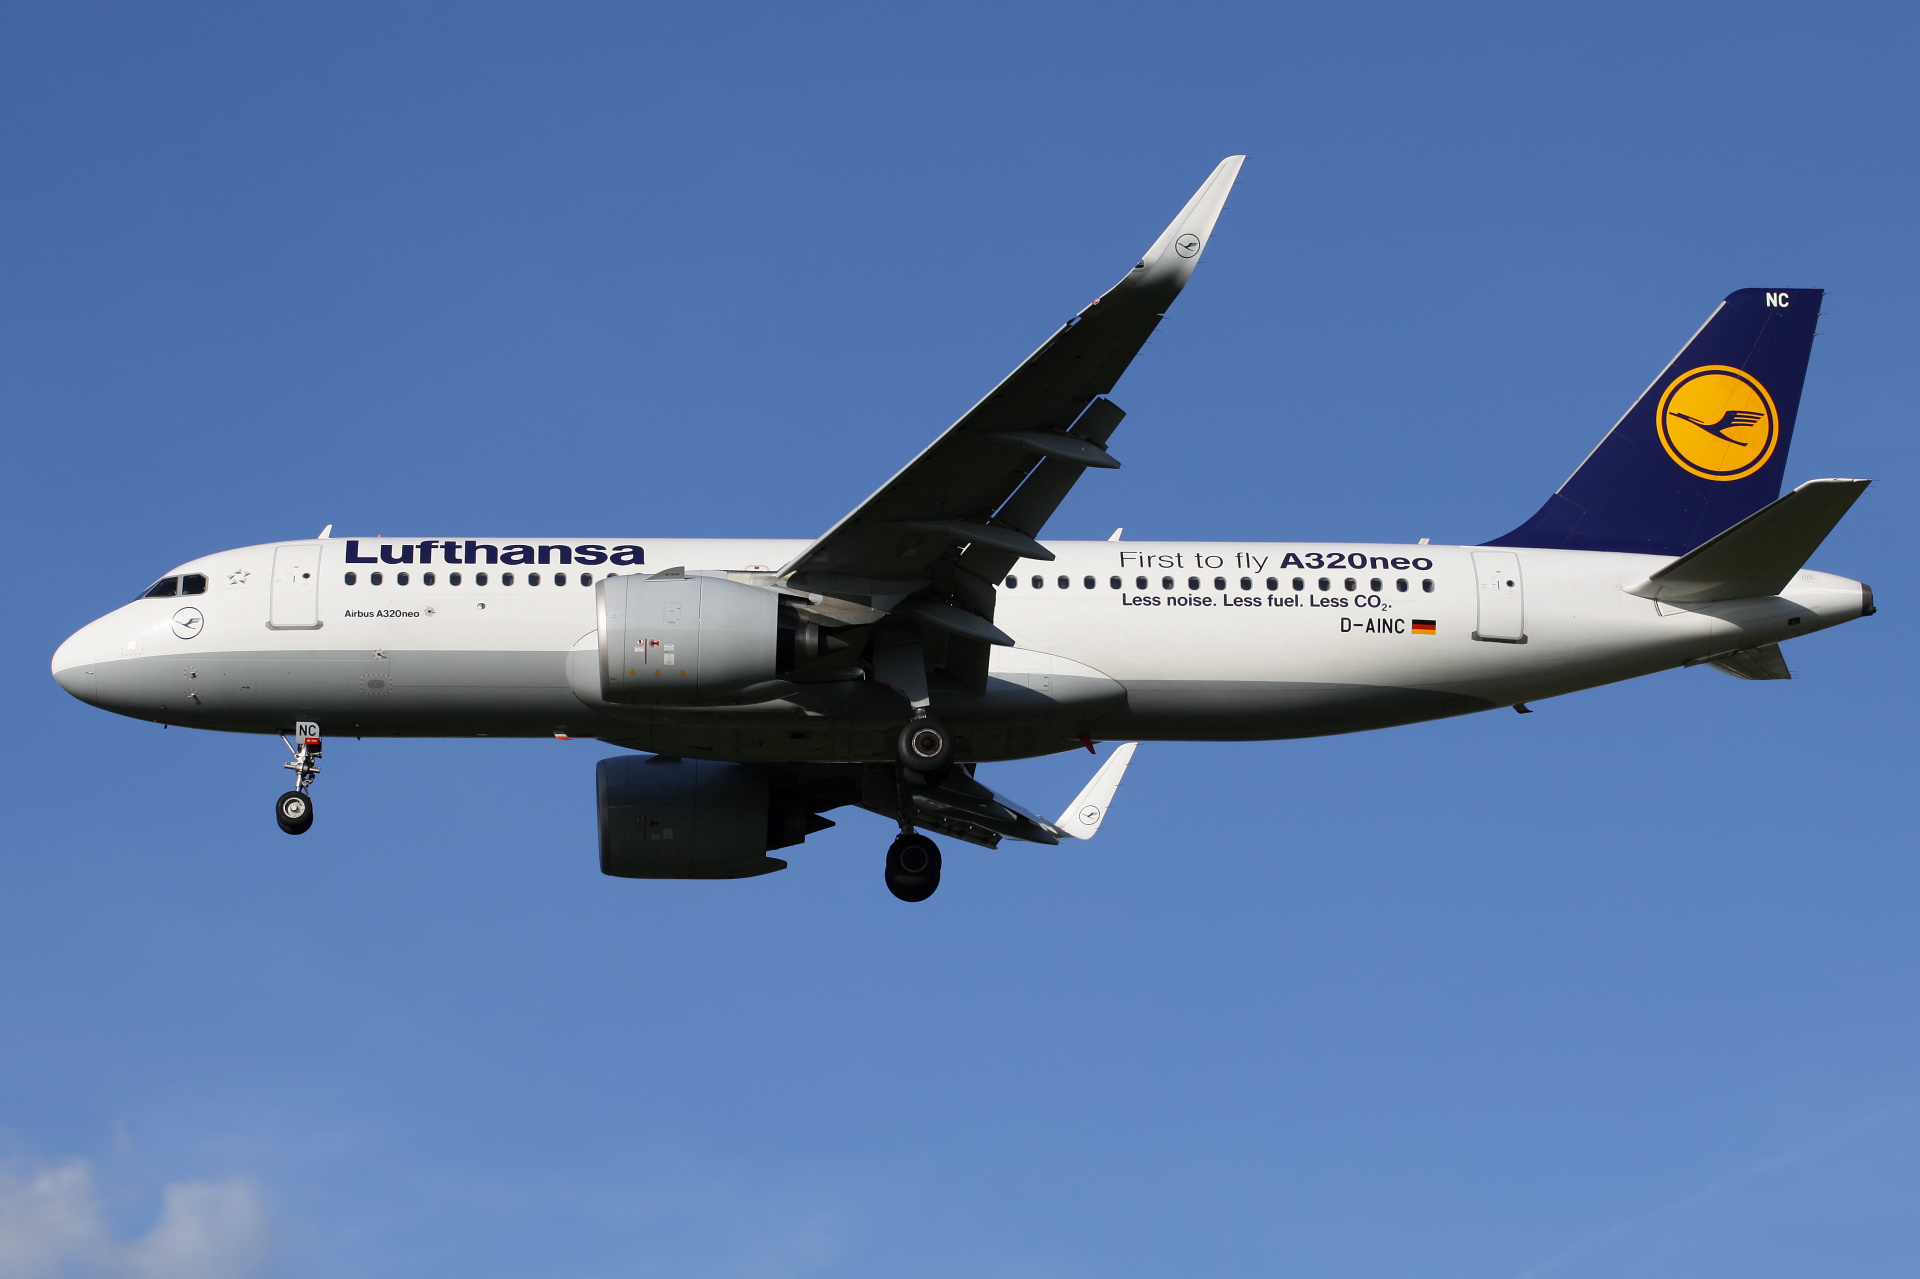 D-AINC (malowanie First to fly) (Samoloty » Spotting na EPWA » Airbus A320neo » Lufthansa)